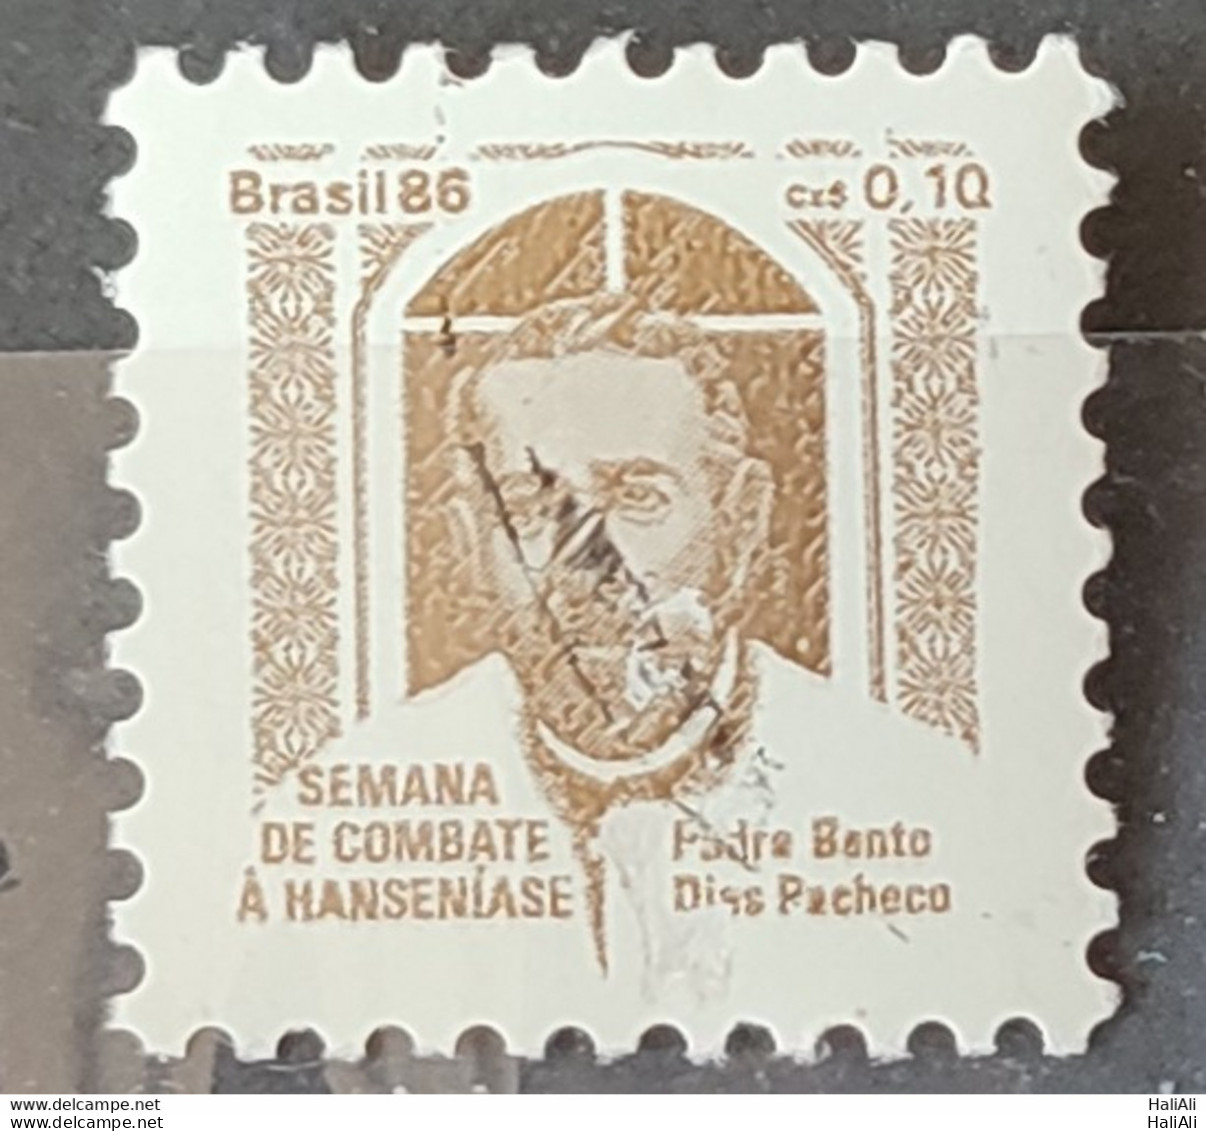 C 1538 Brazil Stamp Combat Against Hansen Hanseniasse Health Father Bento Religion 1986 H23 Circulated 1.jpg - Usati